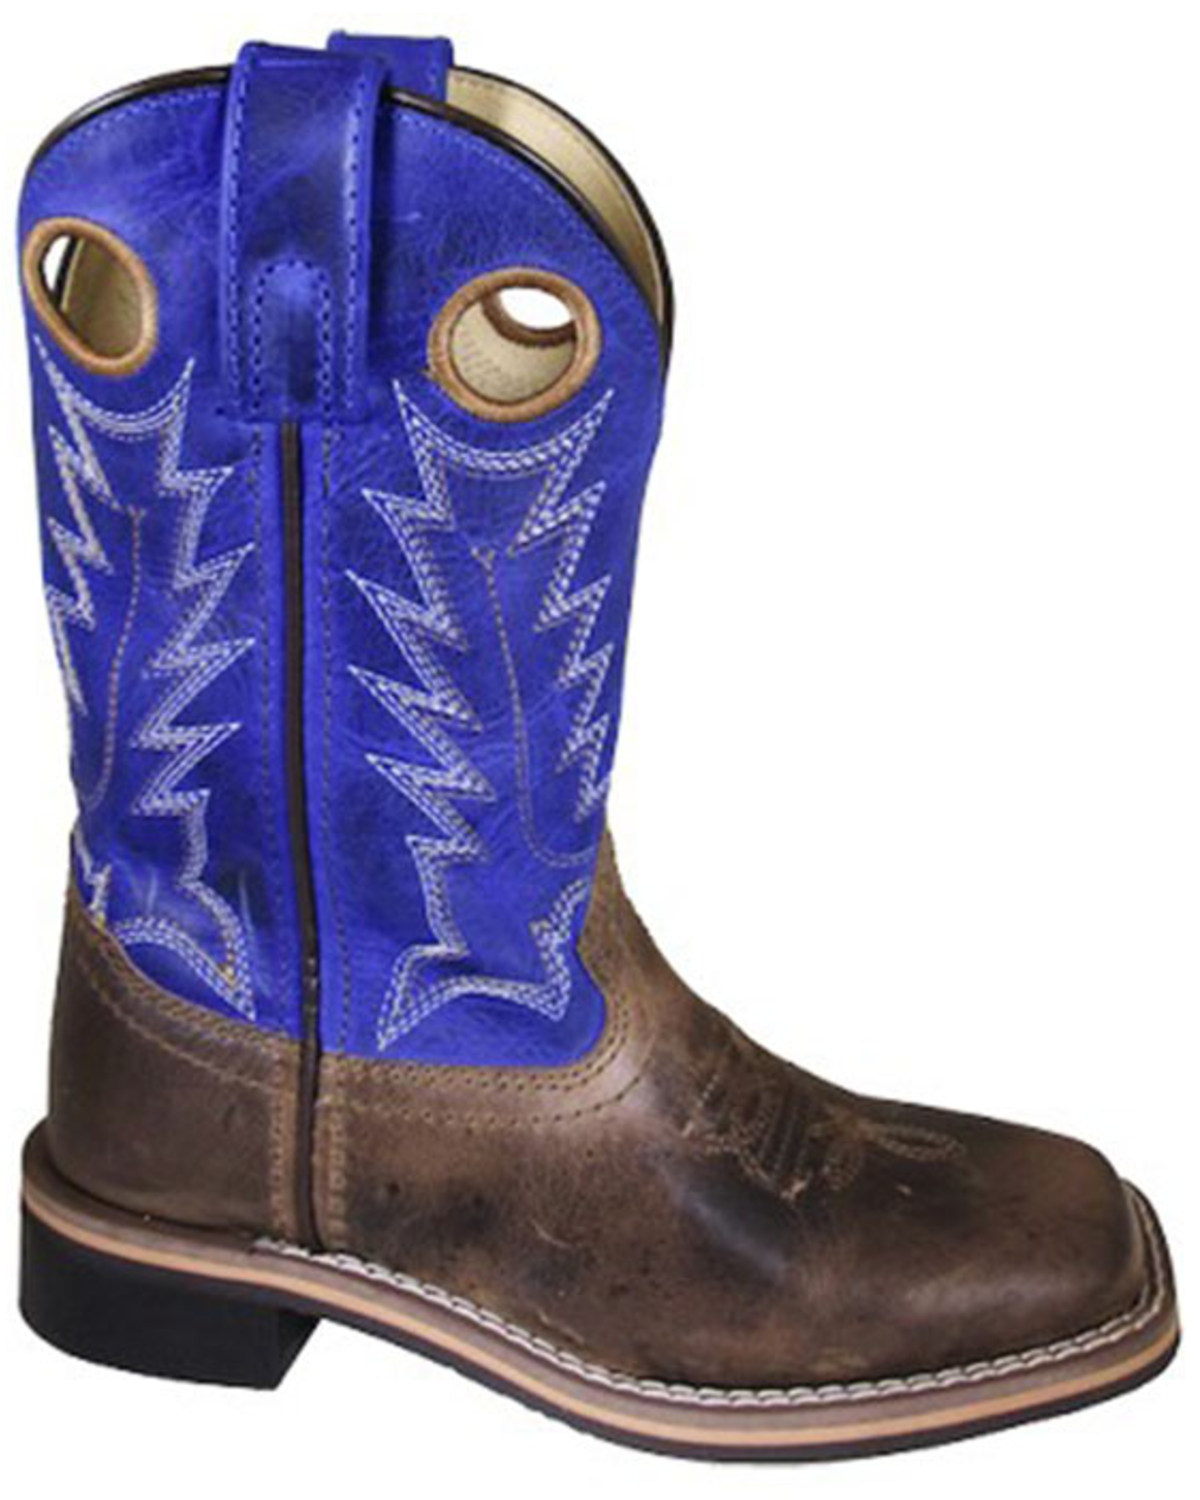 Smoky Mountain Boys' Dusty Western Boots